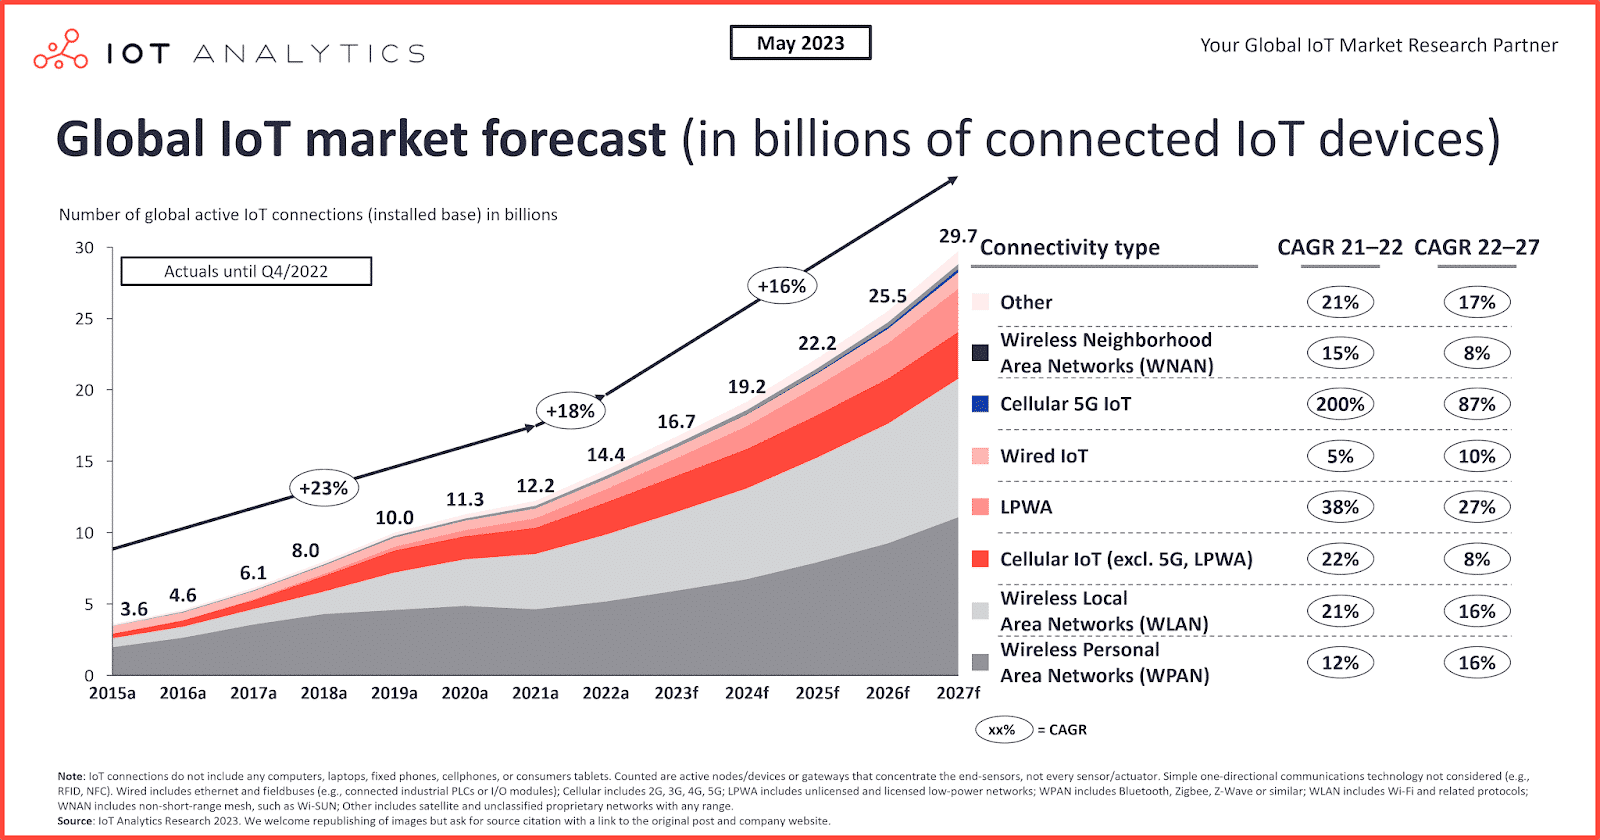 Global IoT market forecast - Image source: IoT Analytics